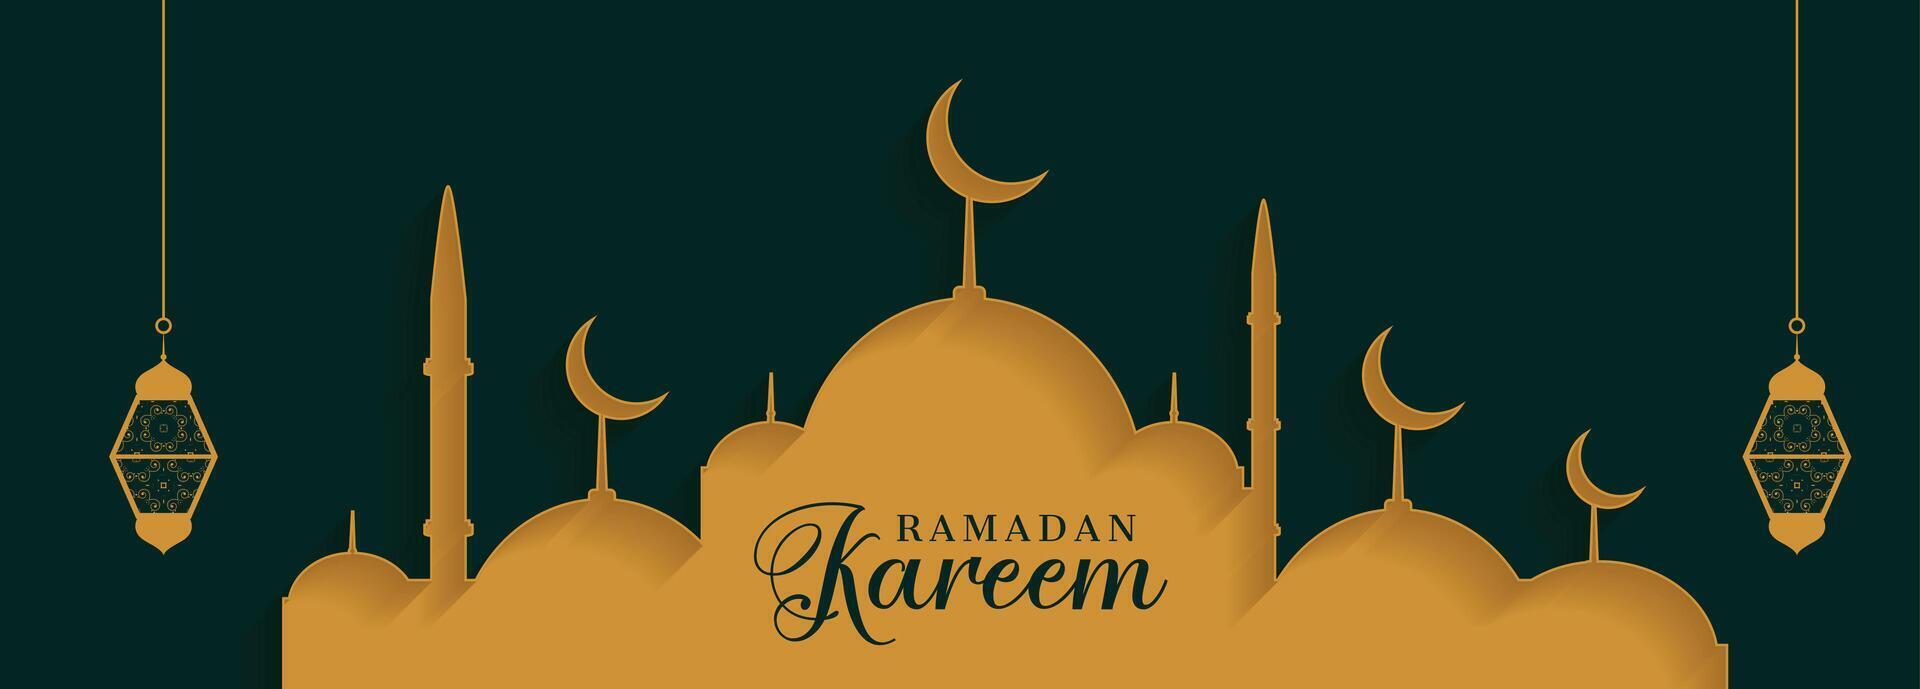 ramadan kareem flat paper style banner design vector